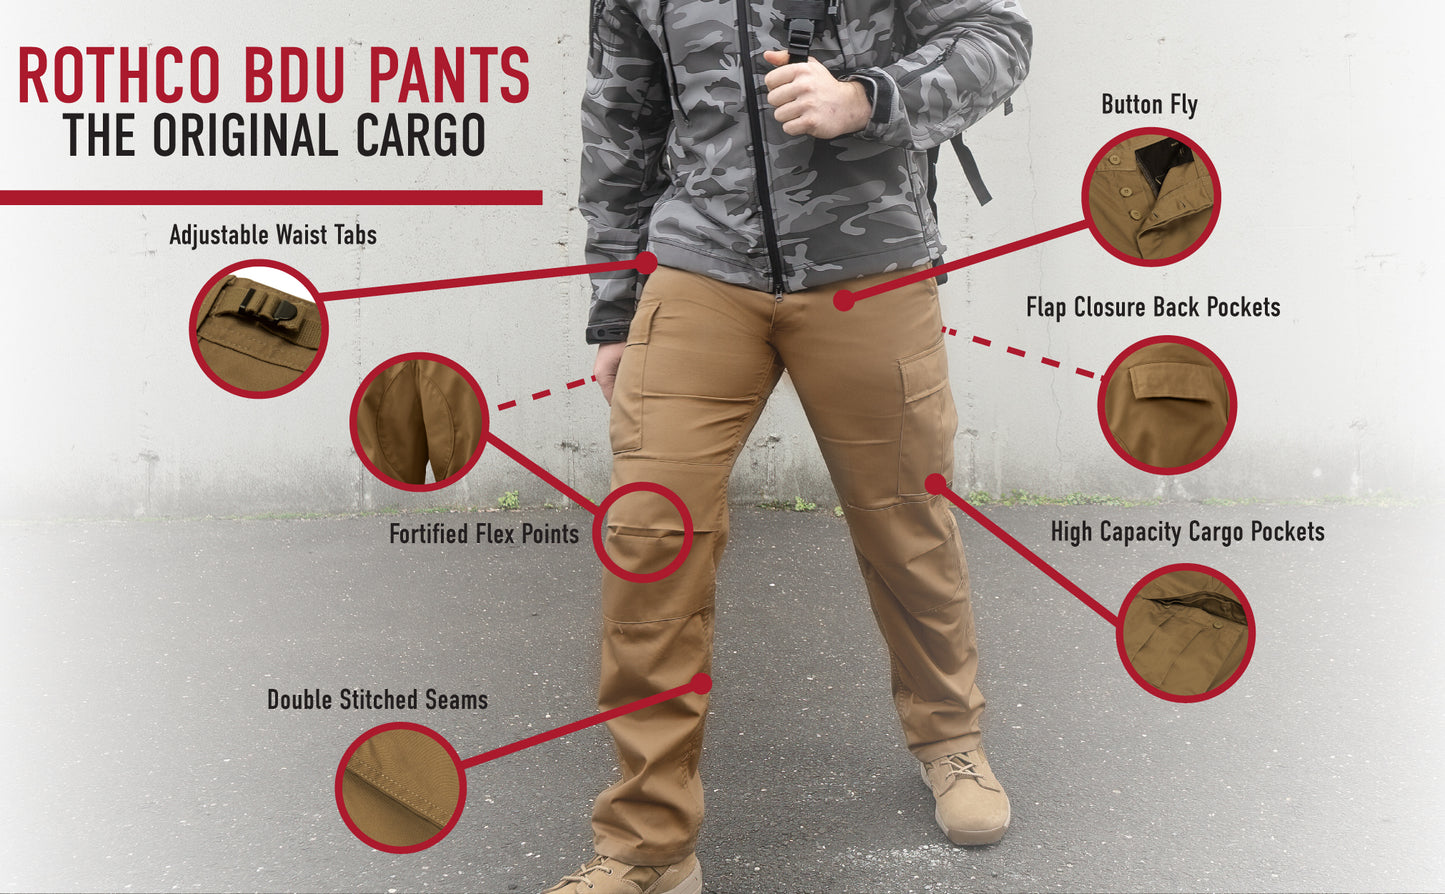 Rothco Color Camo Tactical BDU Pants - Black Camo